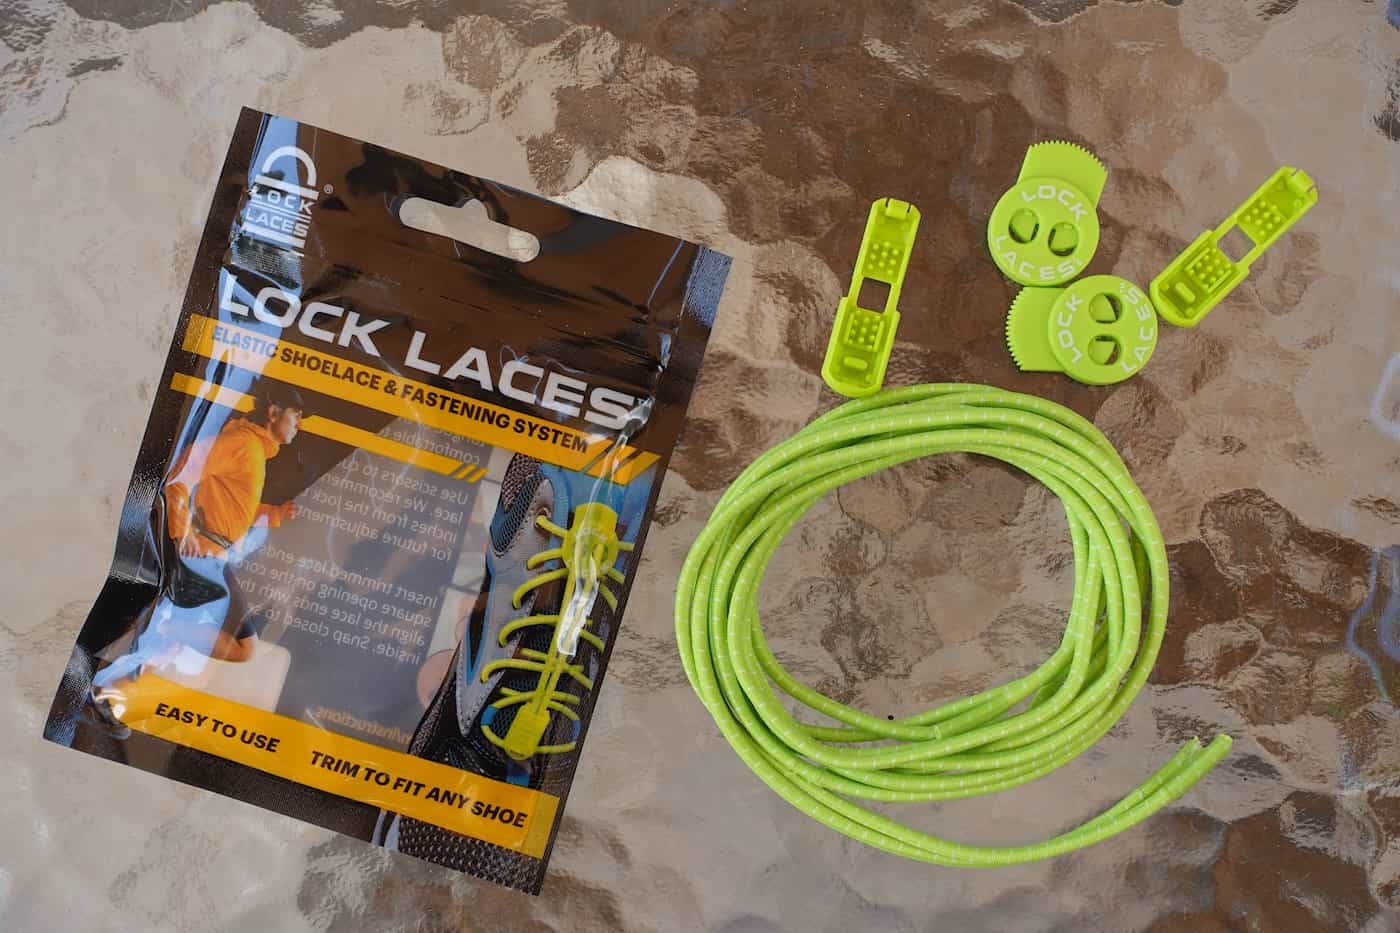 lock laces